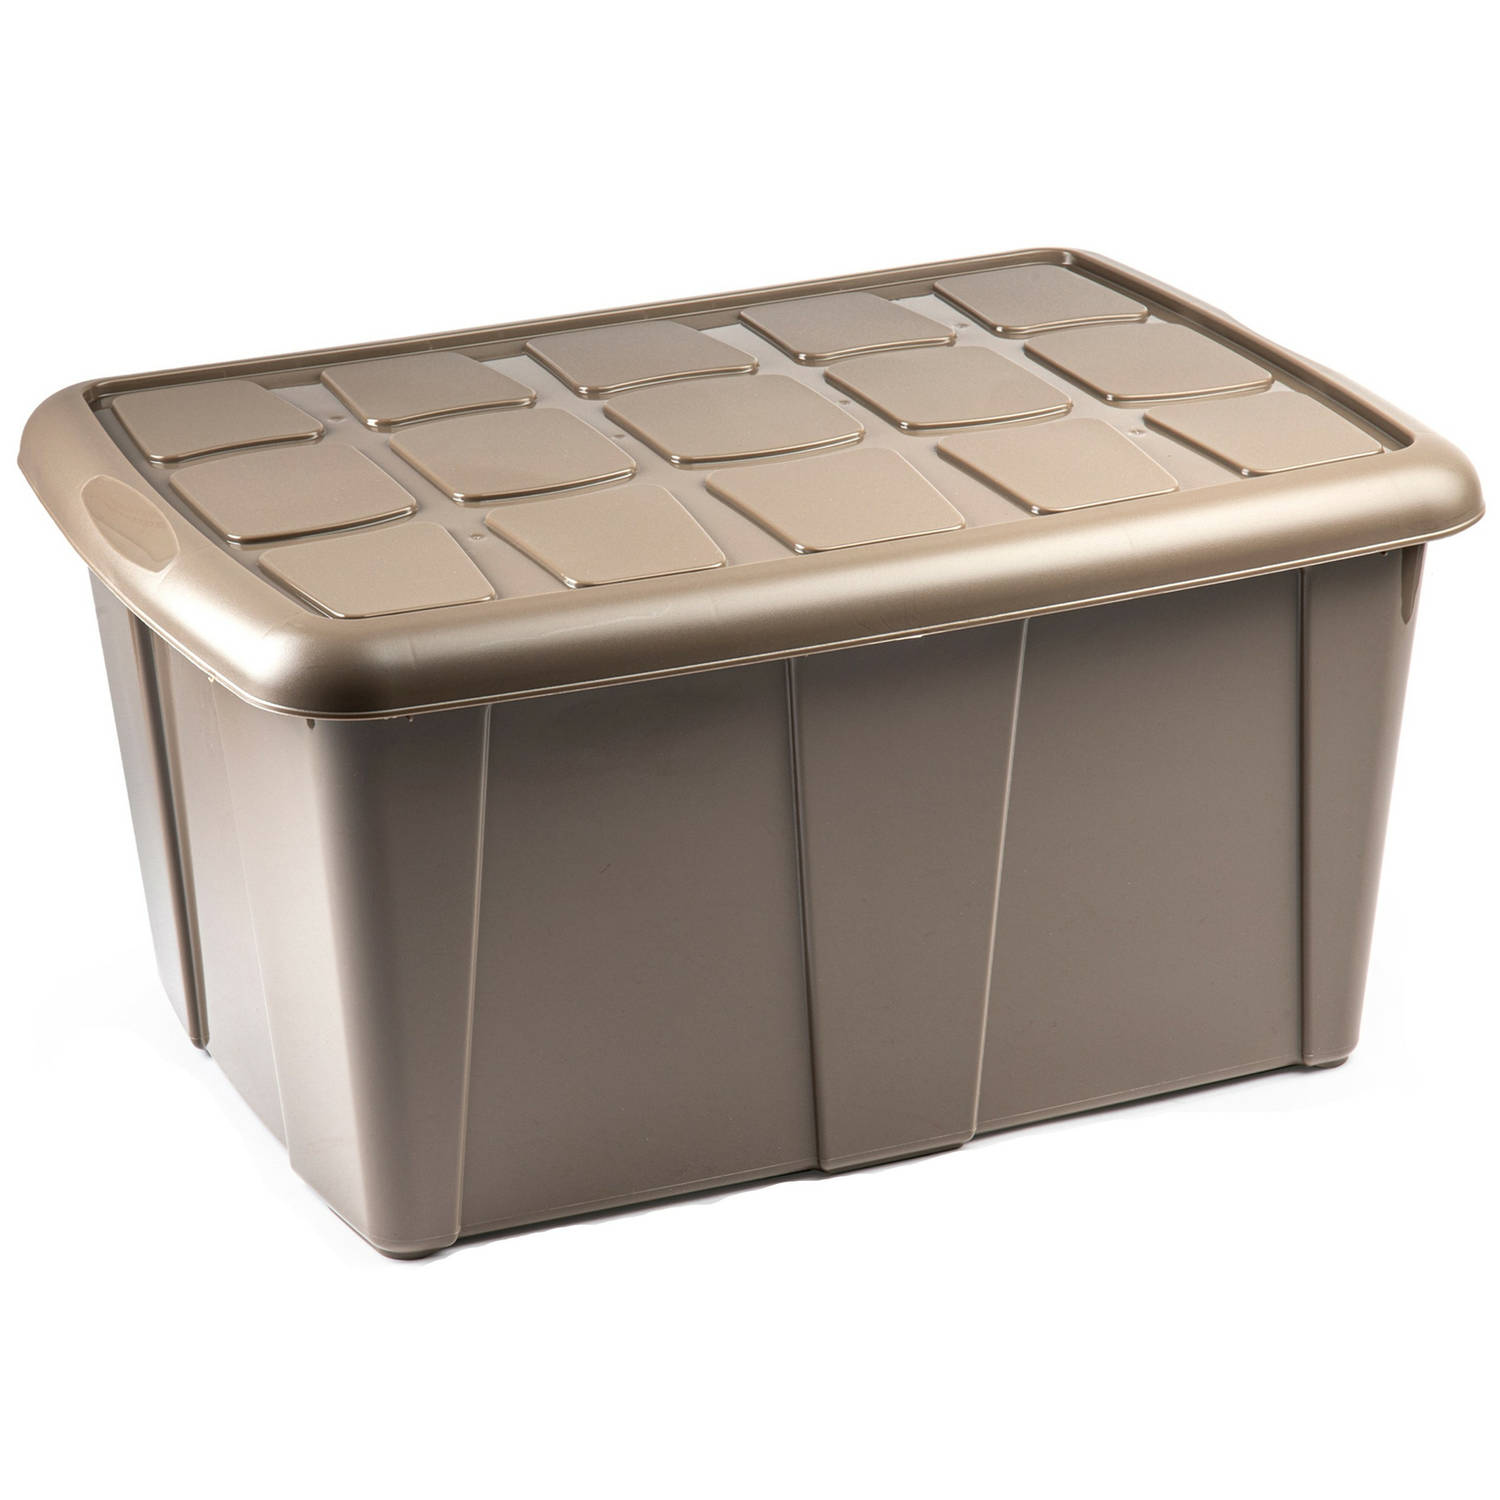 Opslagbox kist van 60 liter met deksel Beige kunststof 63 x 46 x 32 cm Opbergbox